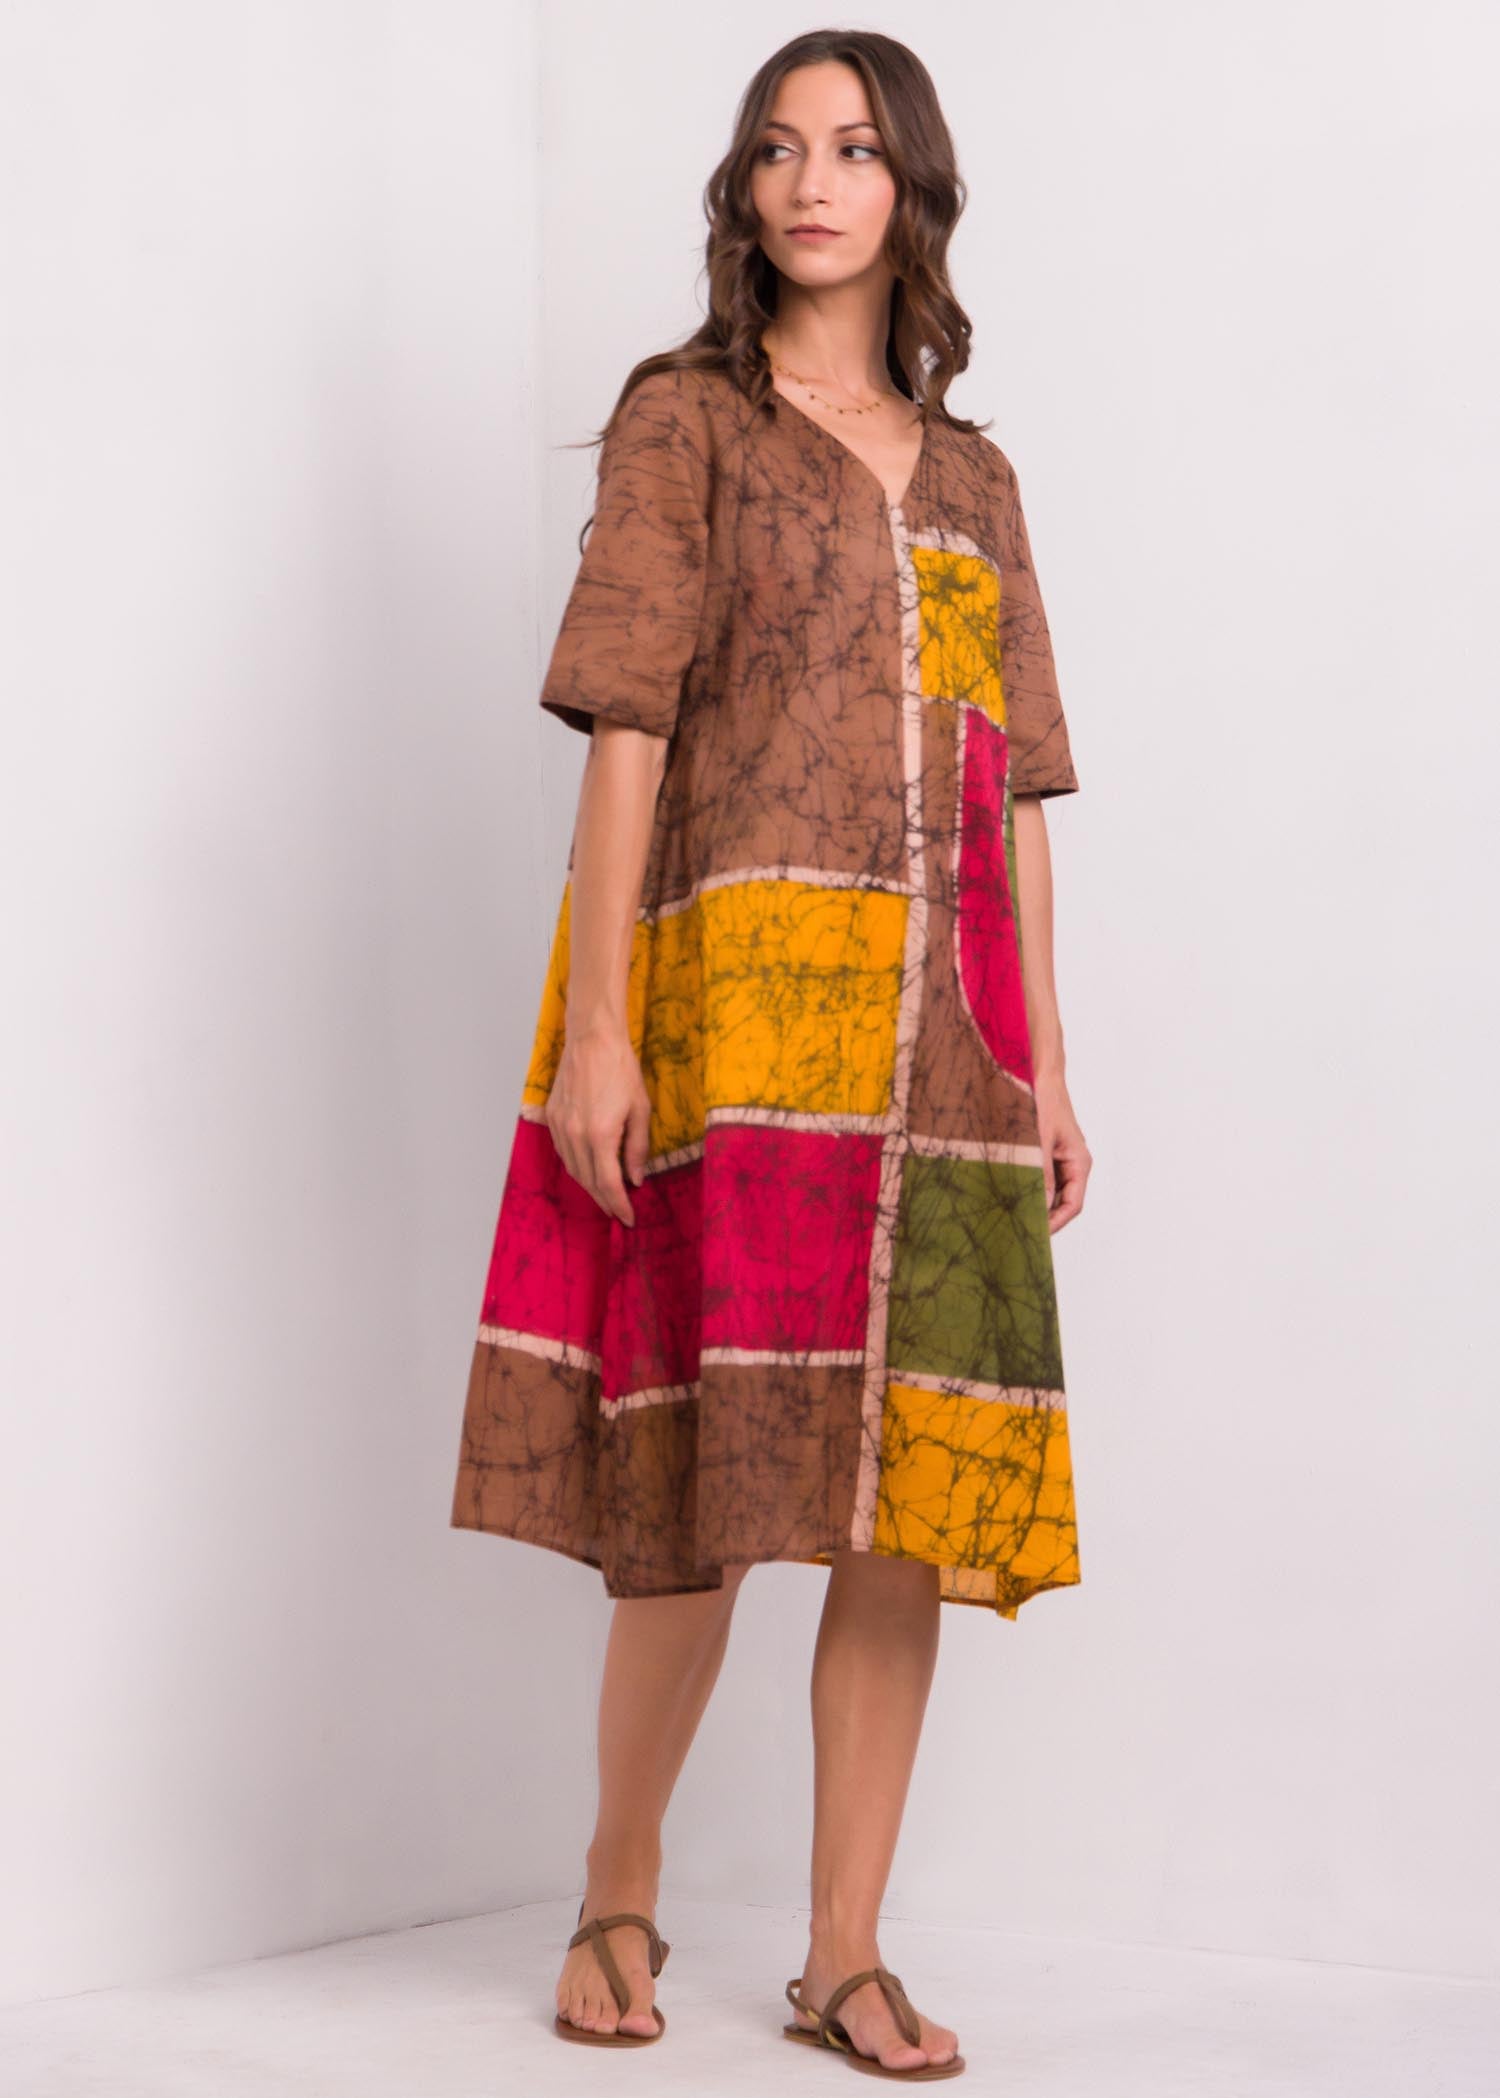 Geomatric Shapes Detailed Batik Dress